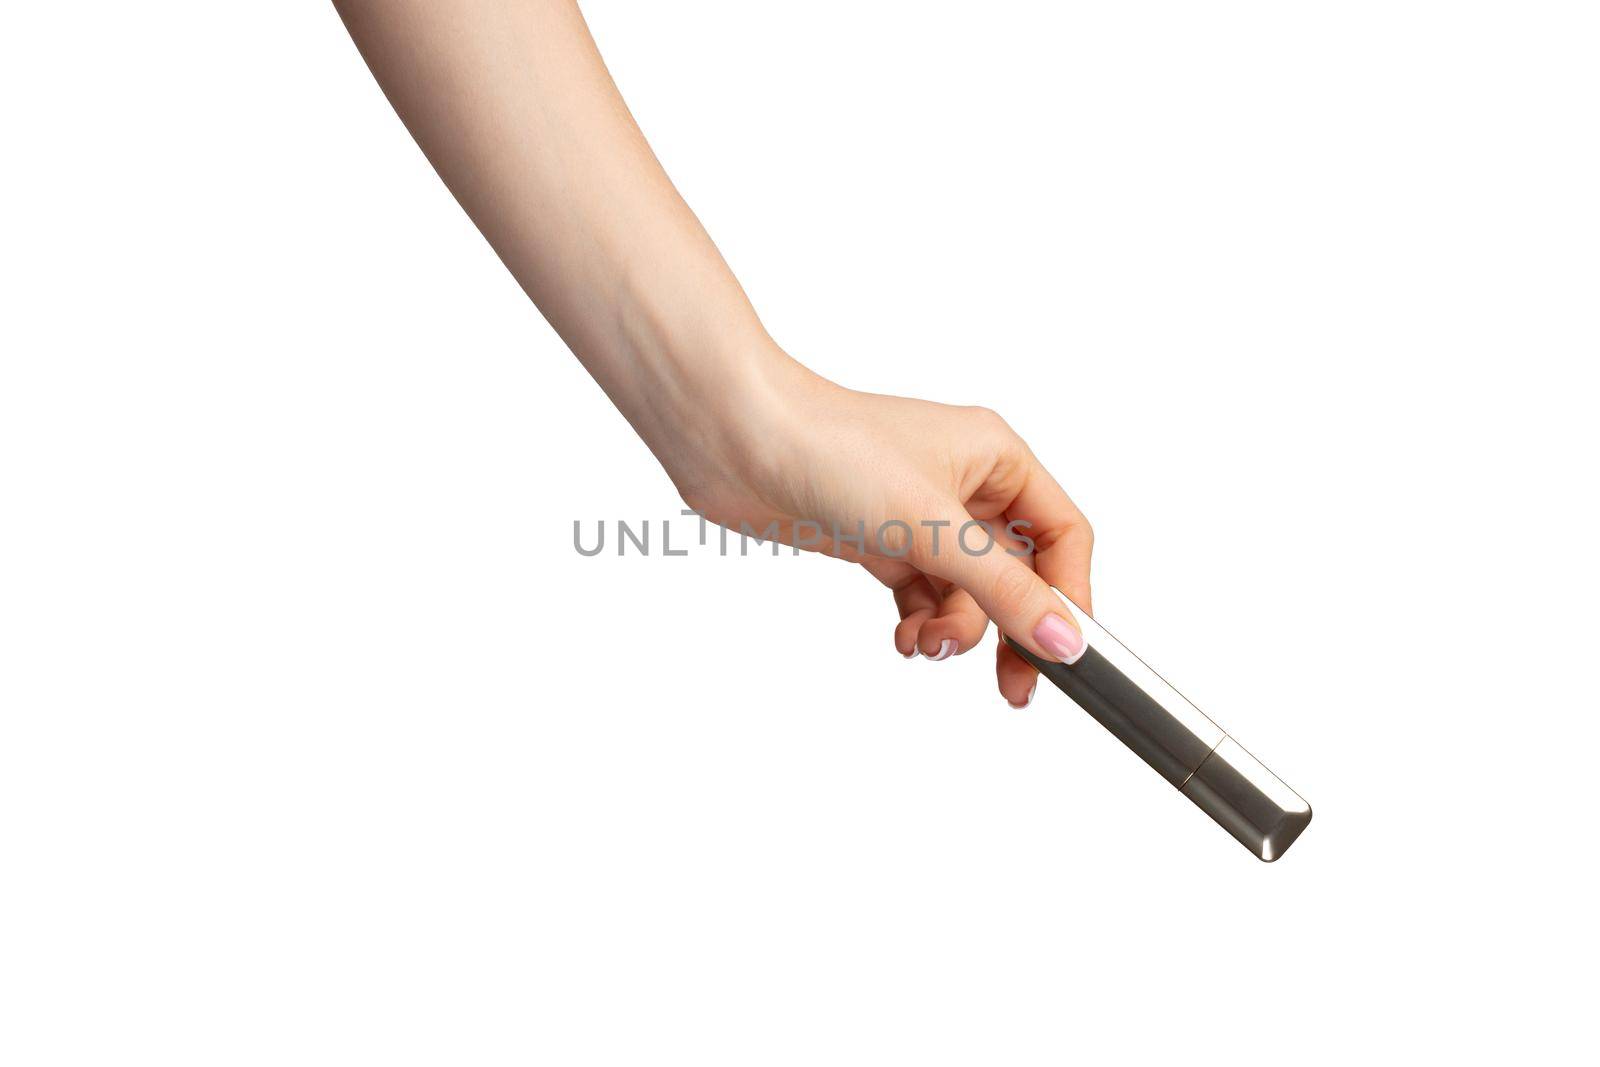 Hand holding lipsticks isolated on white background, close up.